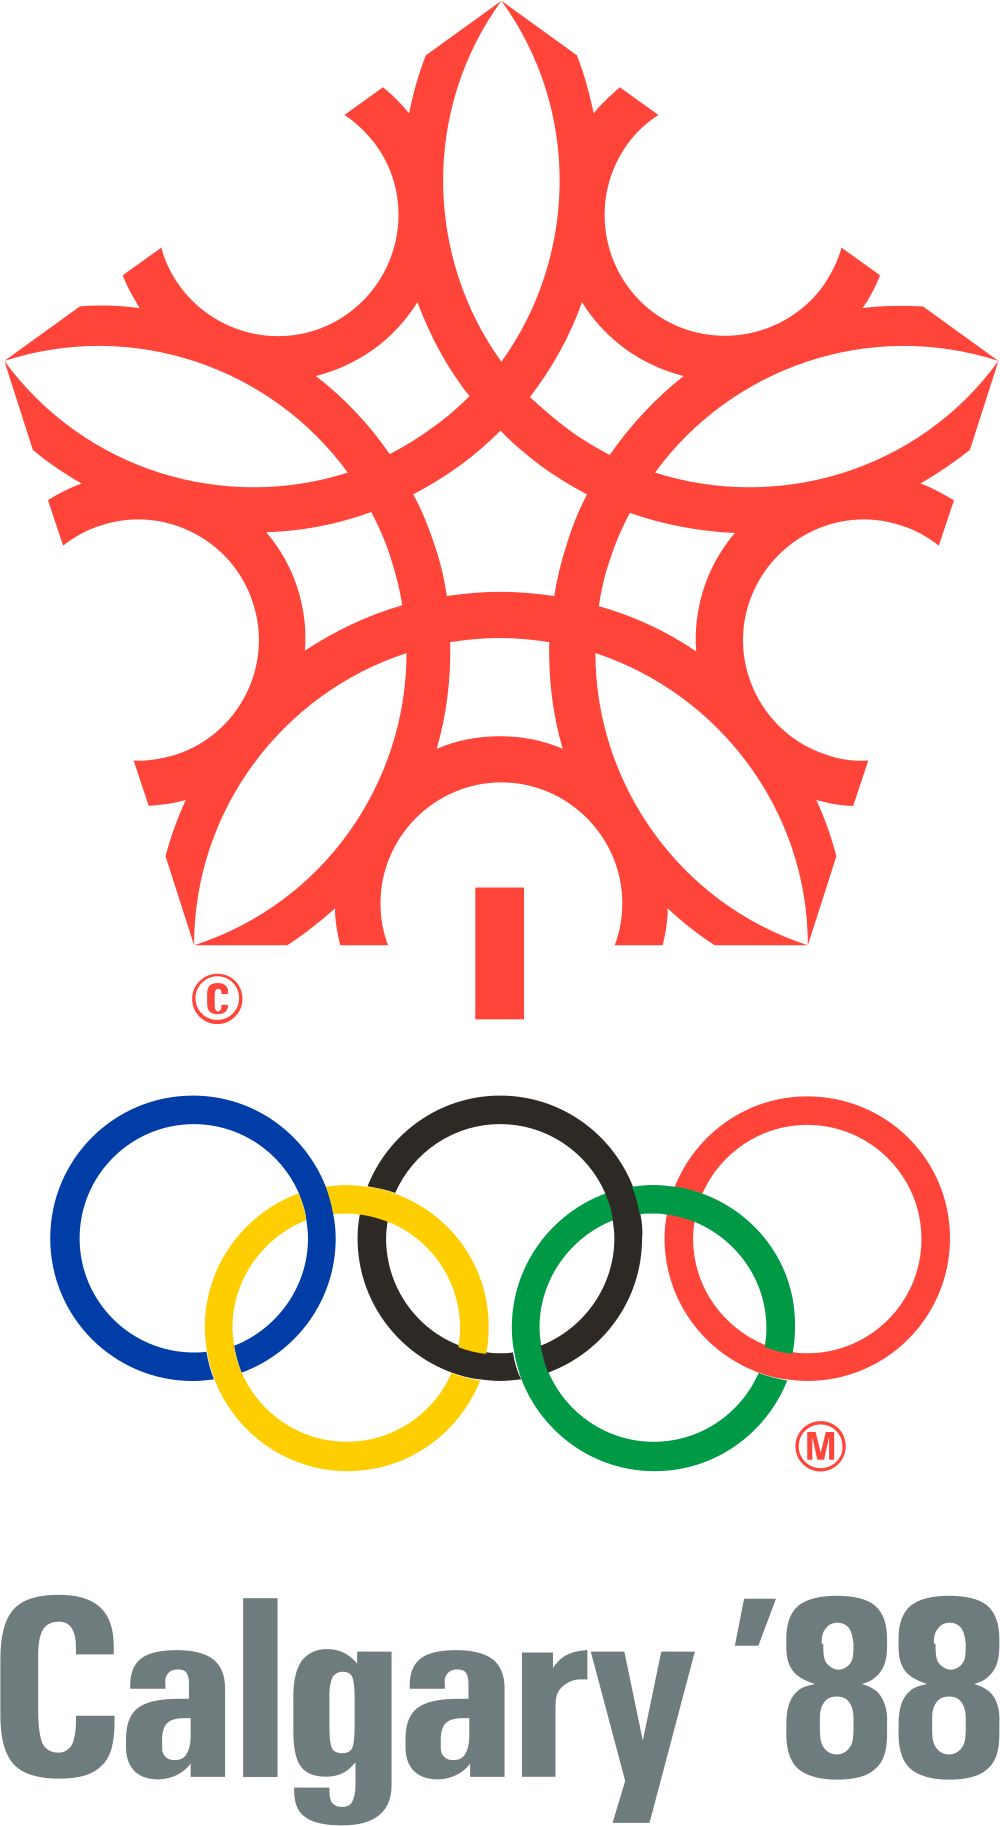 1988 calgary Winter Olympics logo png transparent